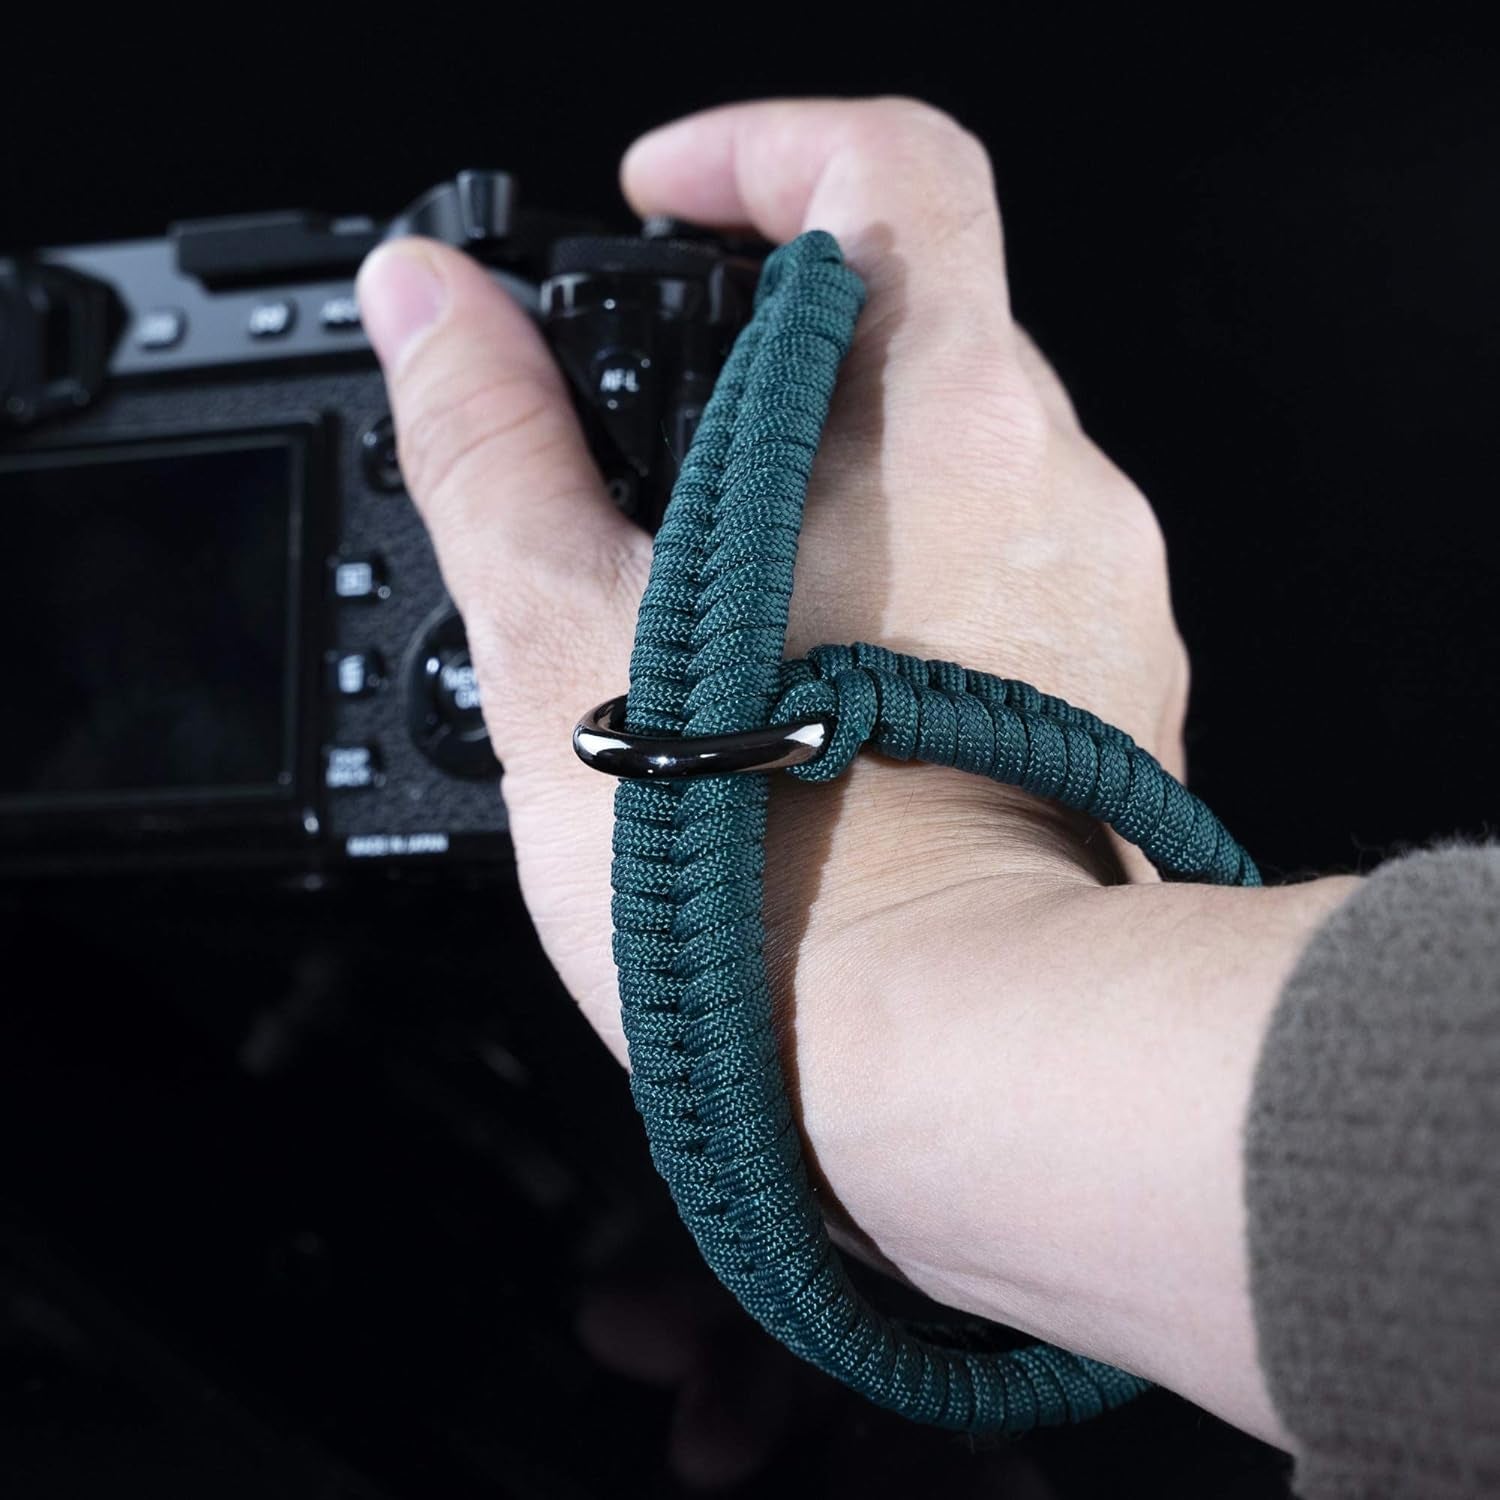 Camera Wrist Strap - Paracord High-End Camera Hand Strap Wrist Lanyard for DSLR or Mirrorless Camera